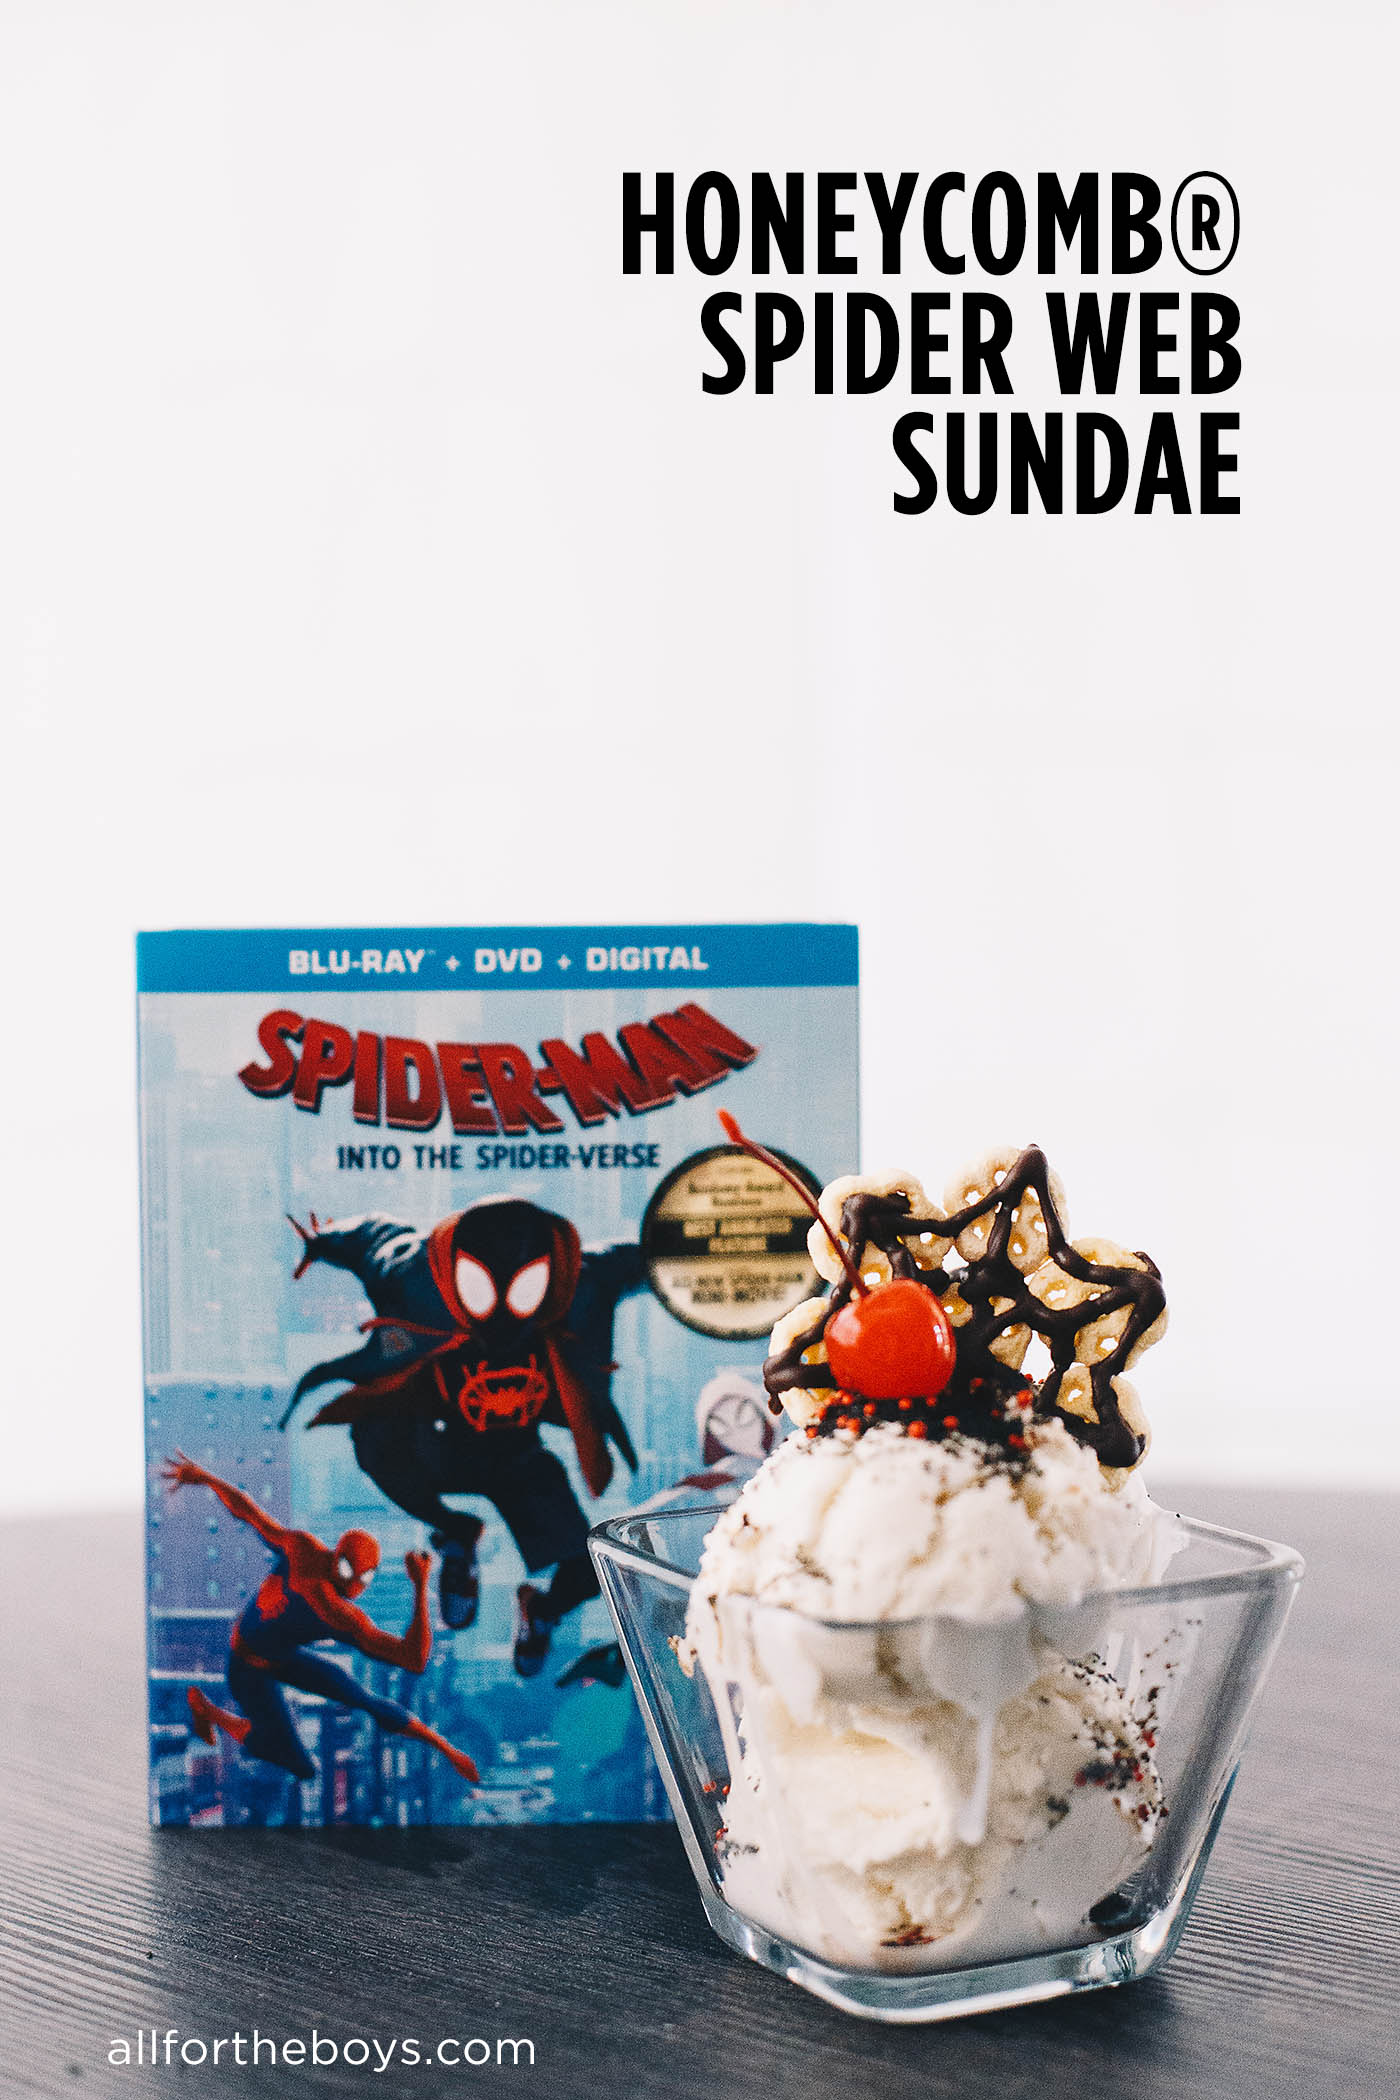 Spider-Man: Into the Spider-Verse Honeycomb® Spider Web Sundae